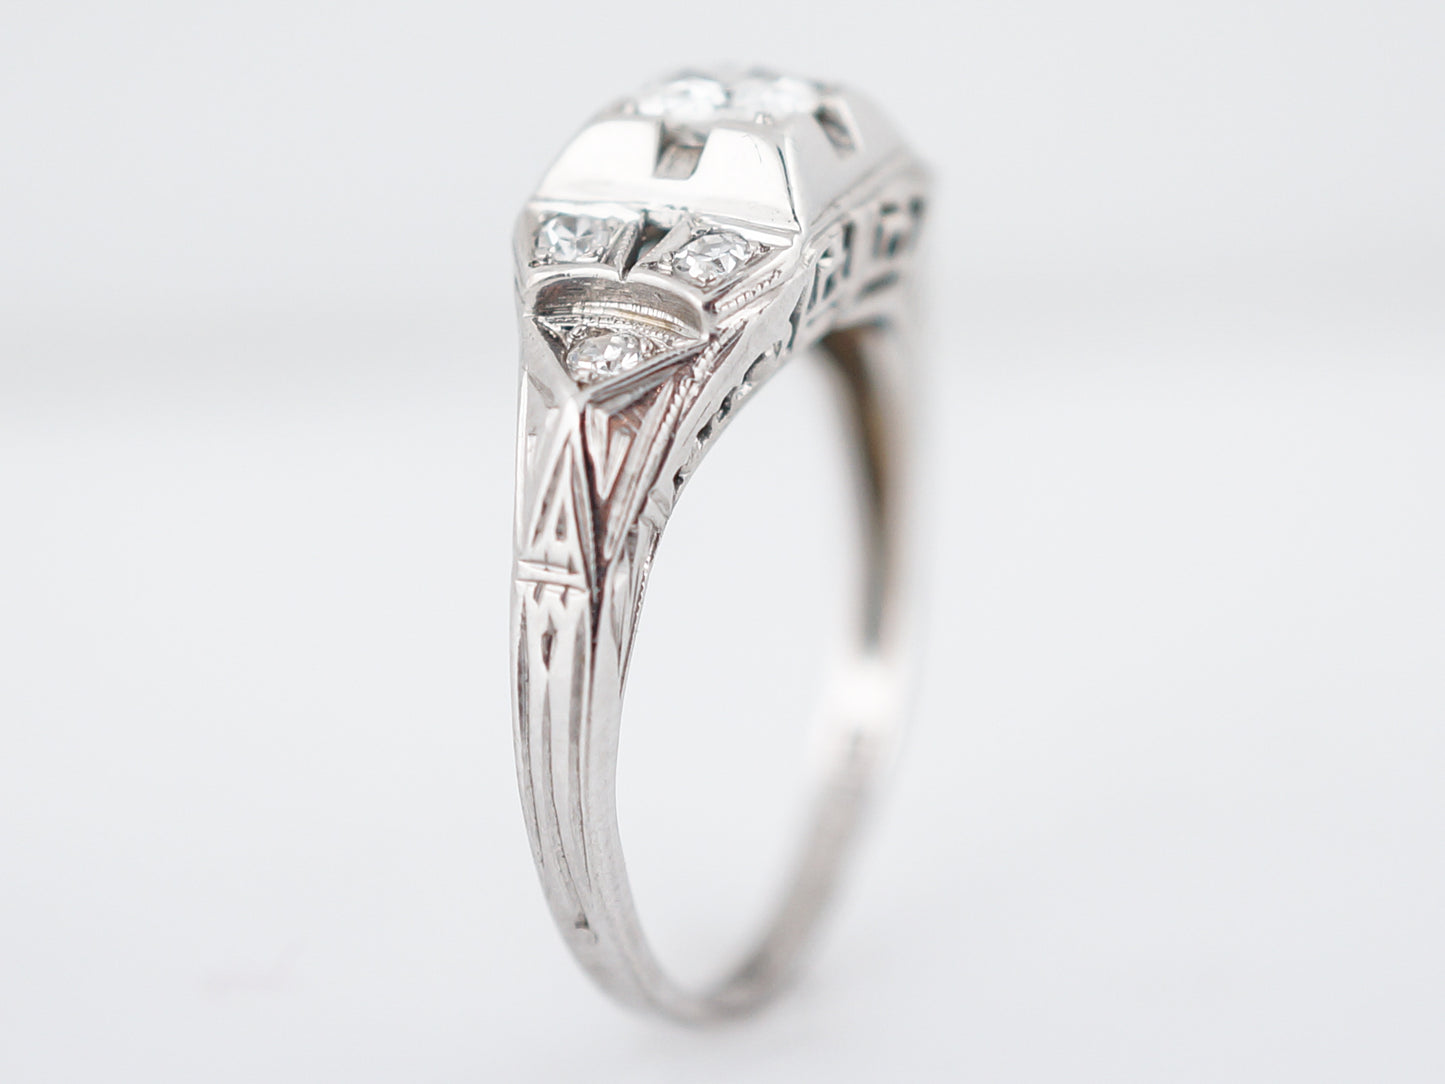 Vintage Engraved Filigree Diamond Engagement Ring in 18k